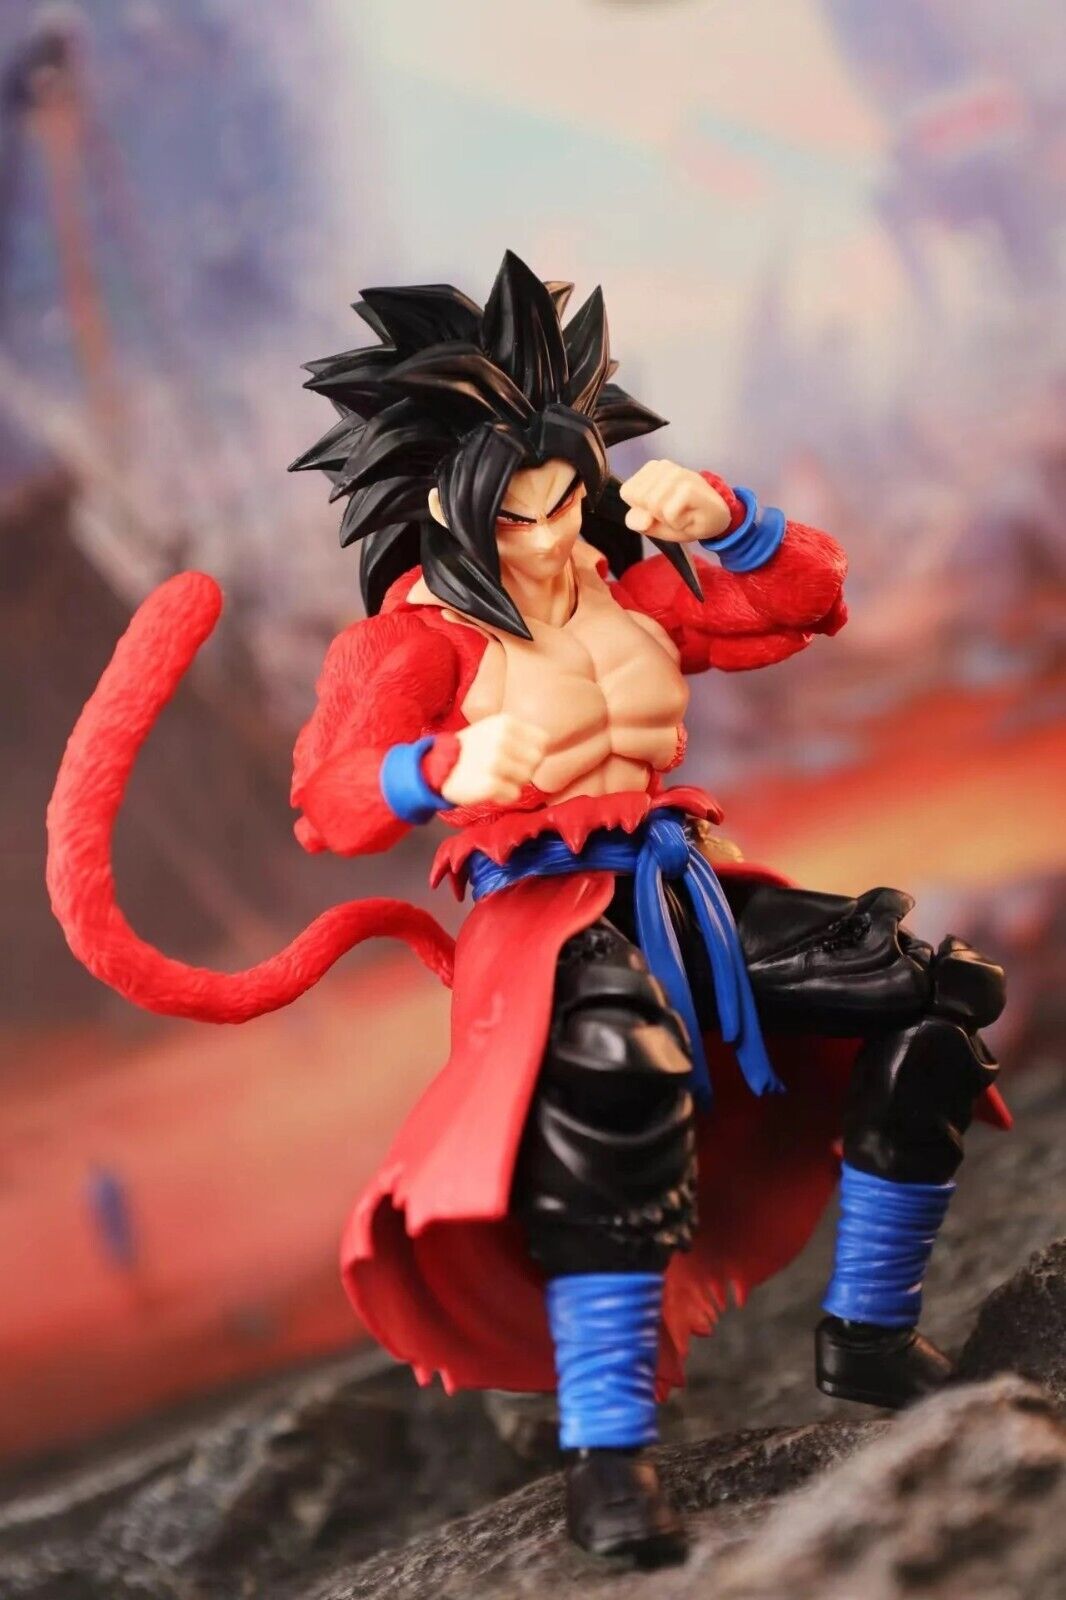 DRAGON BALL Super - Action Figure Goku Xeno SSj4 custom SH figuarts by Kong  | eBay